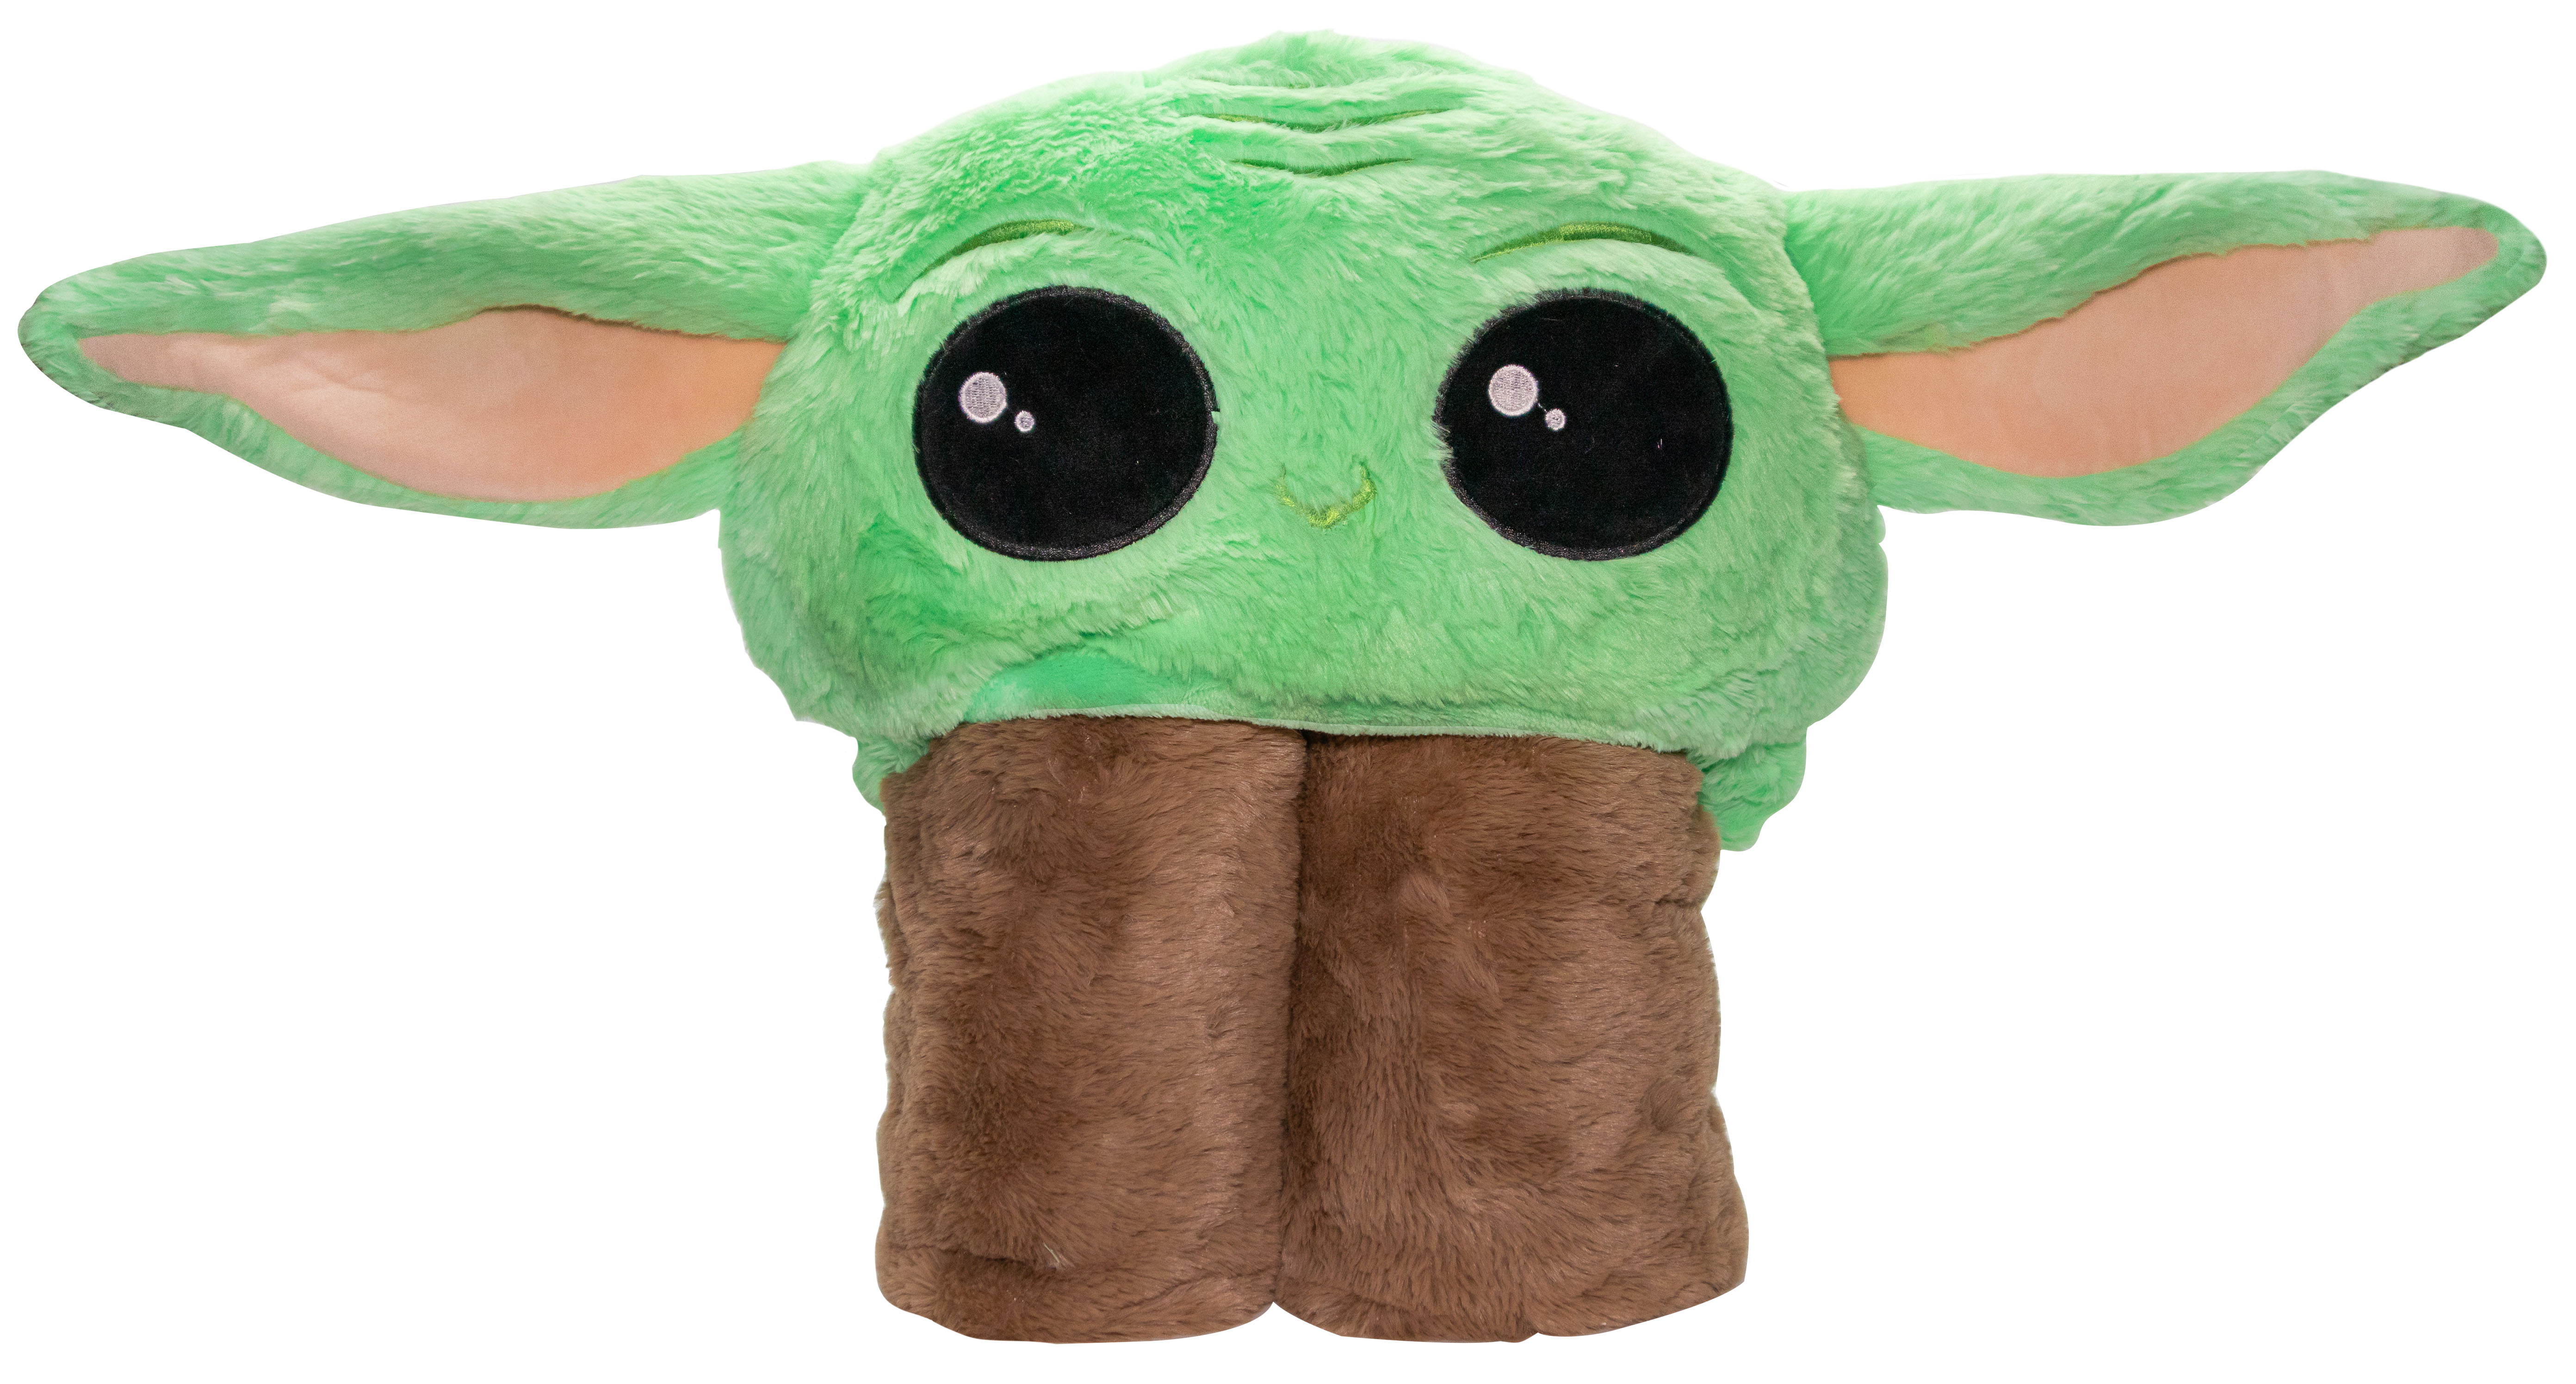 Star Wars Green for sale online The Mandalorian Baby Yoda Pillow Buddy for Children 